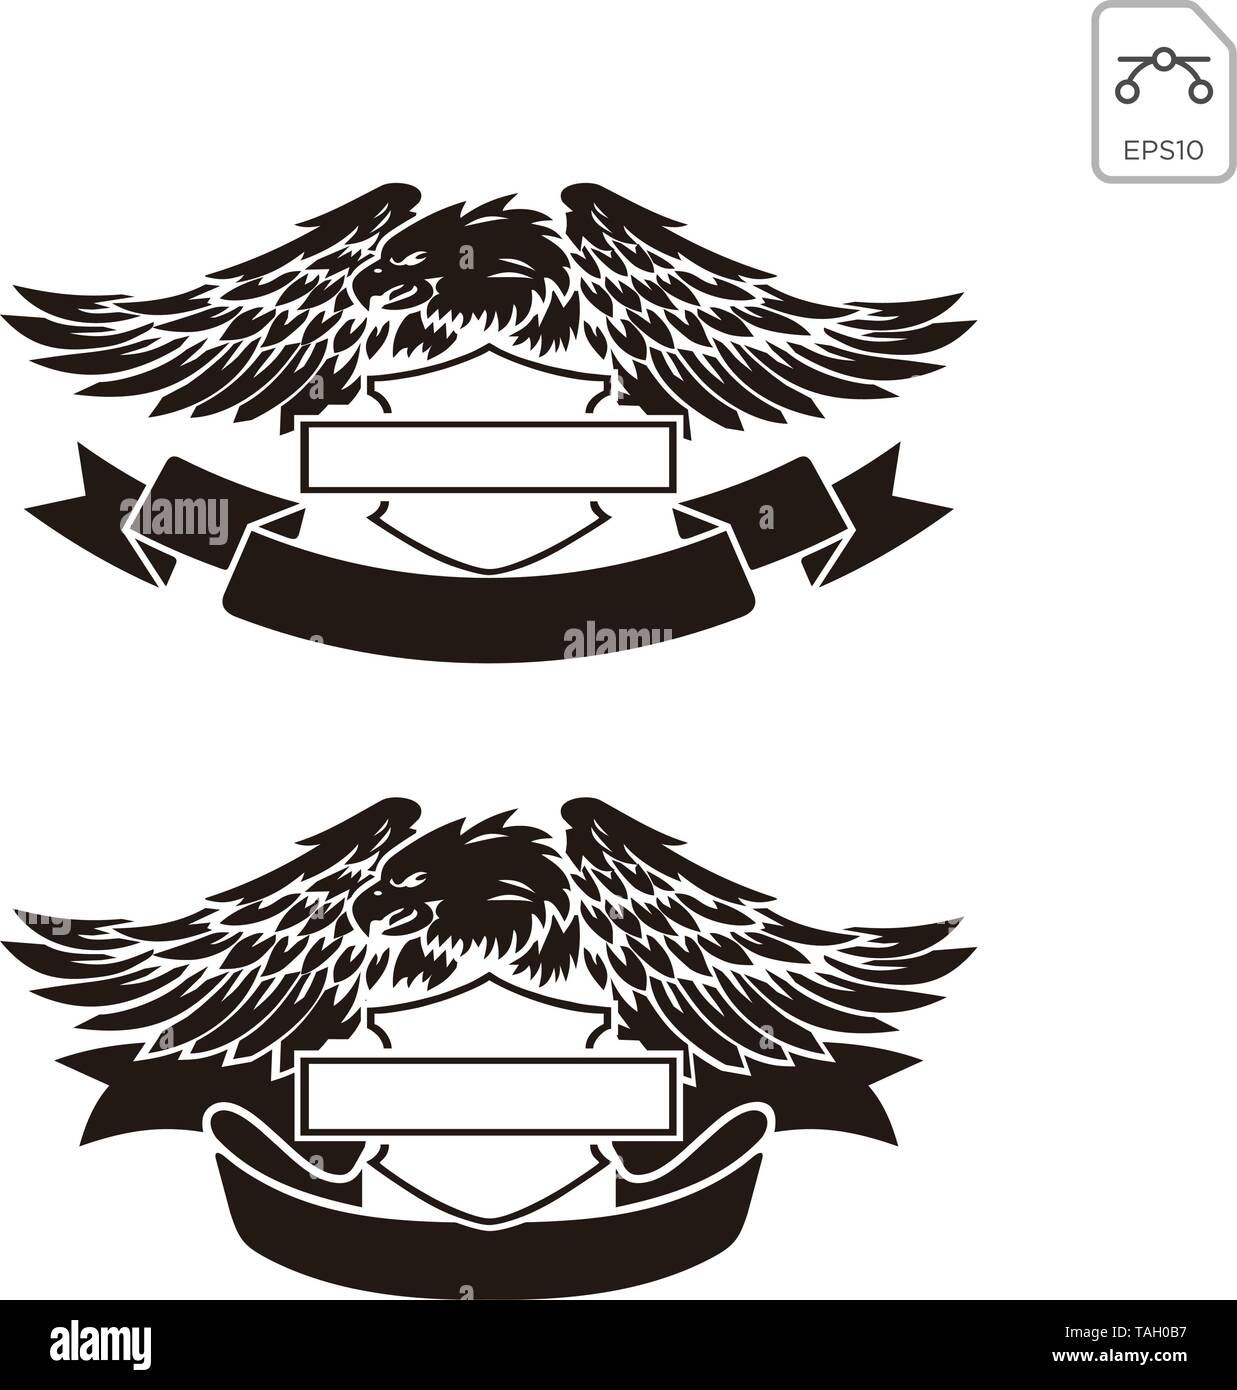 harley davidson emblem or logo symbol vector element isolated Stock Vector